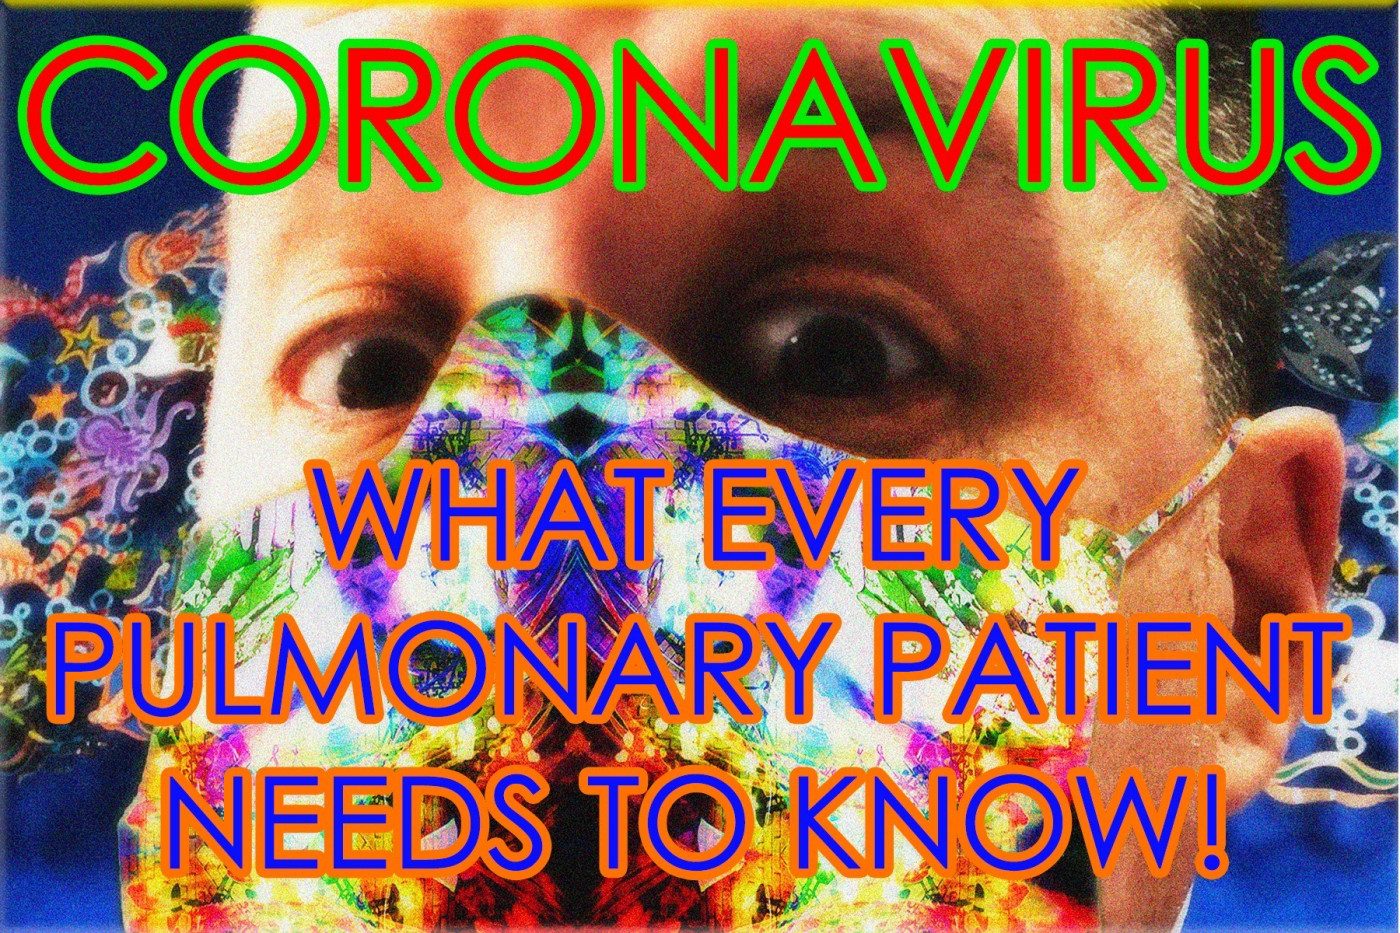 Coronavirus: What Every Pulmonary Patient Needs to Know!